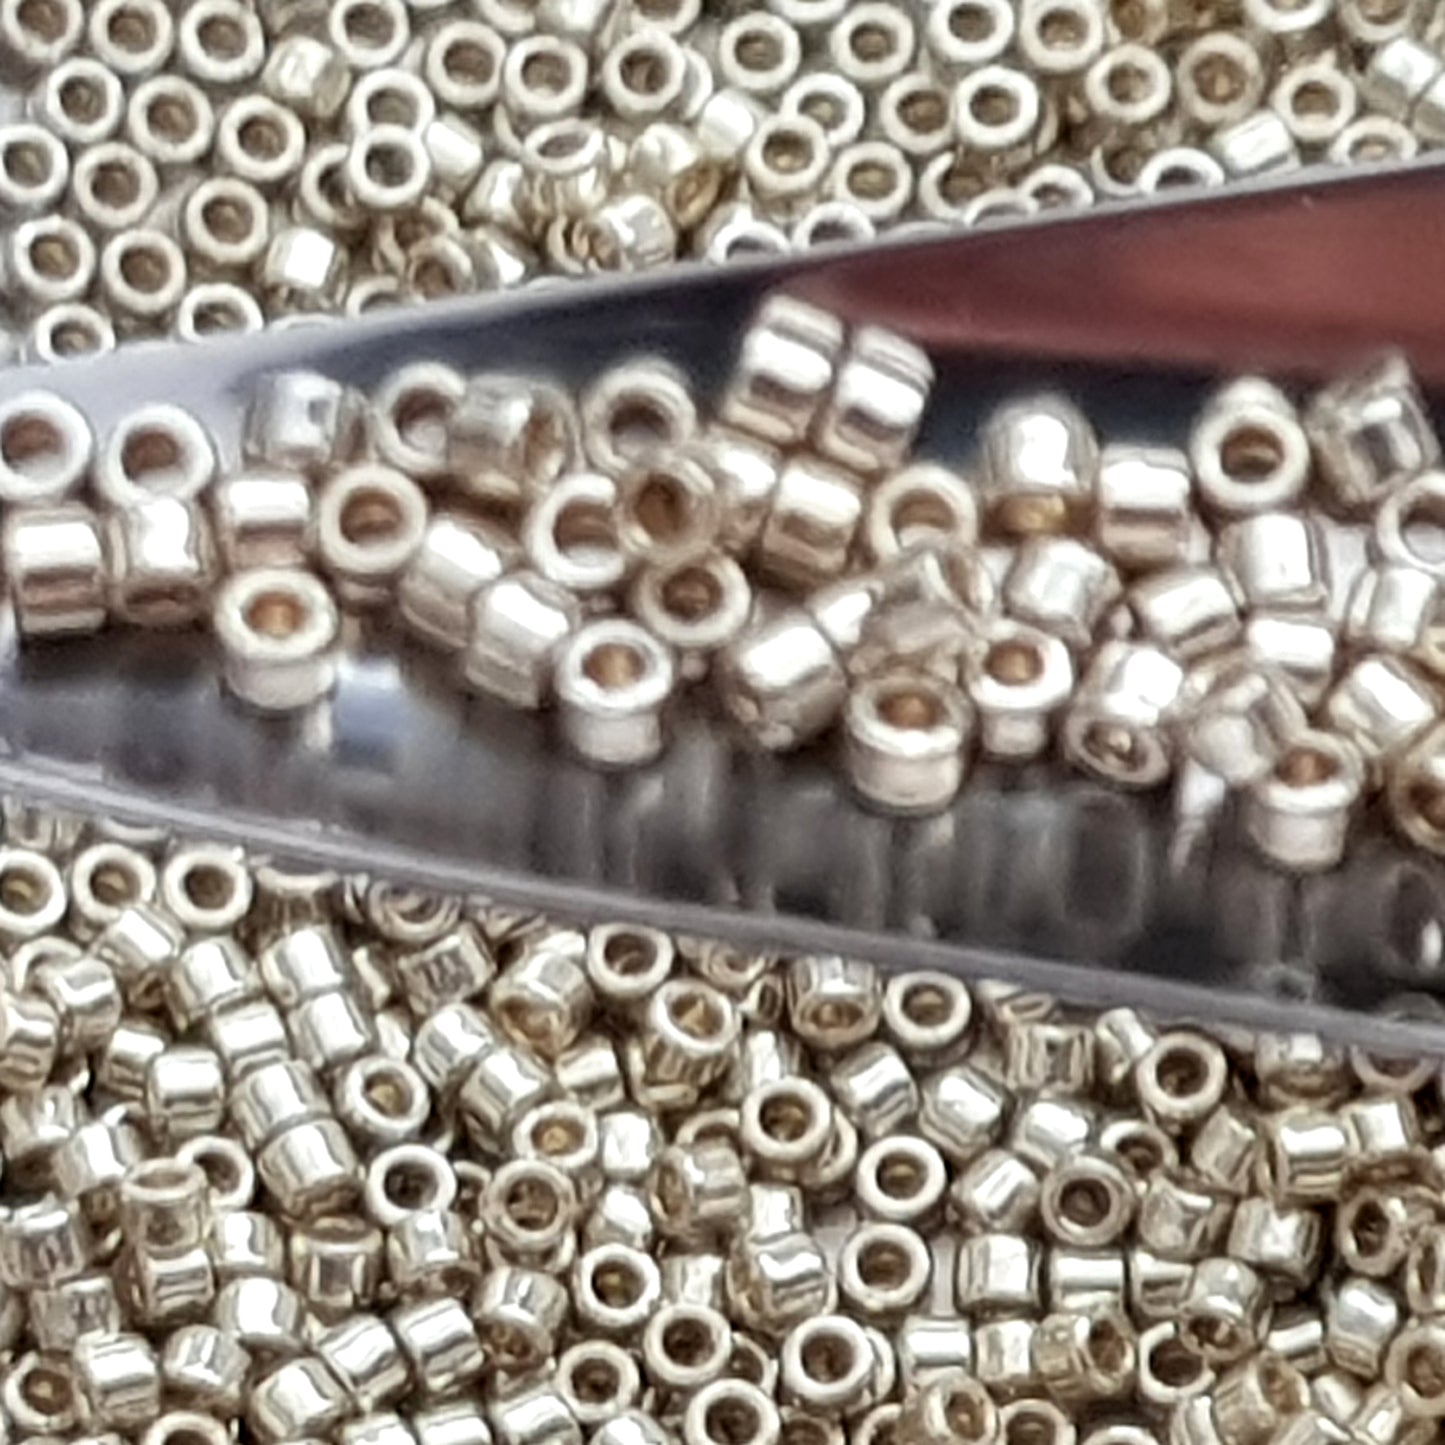 Aiko 11/0 TA-PF558 Aluminium Galvanized PermaFinish 4g Pre-Packed Precision-Cut Cylinder Toho Beads | Beading Supply